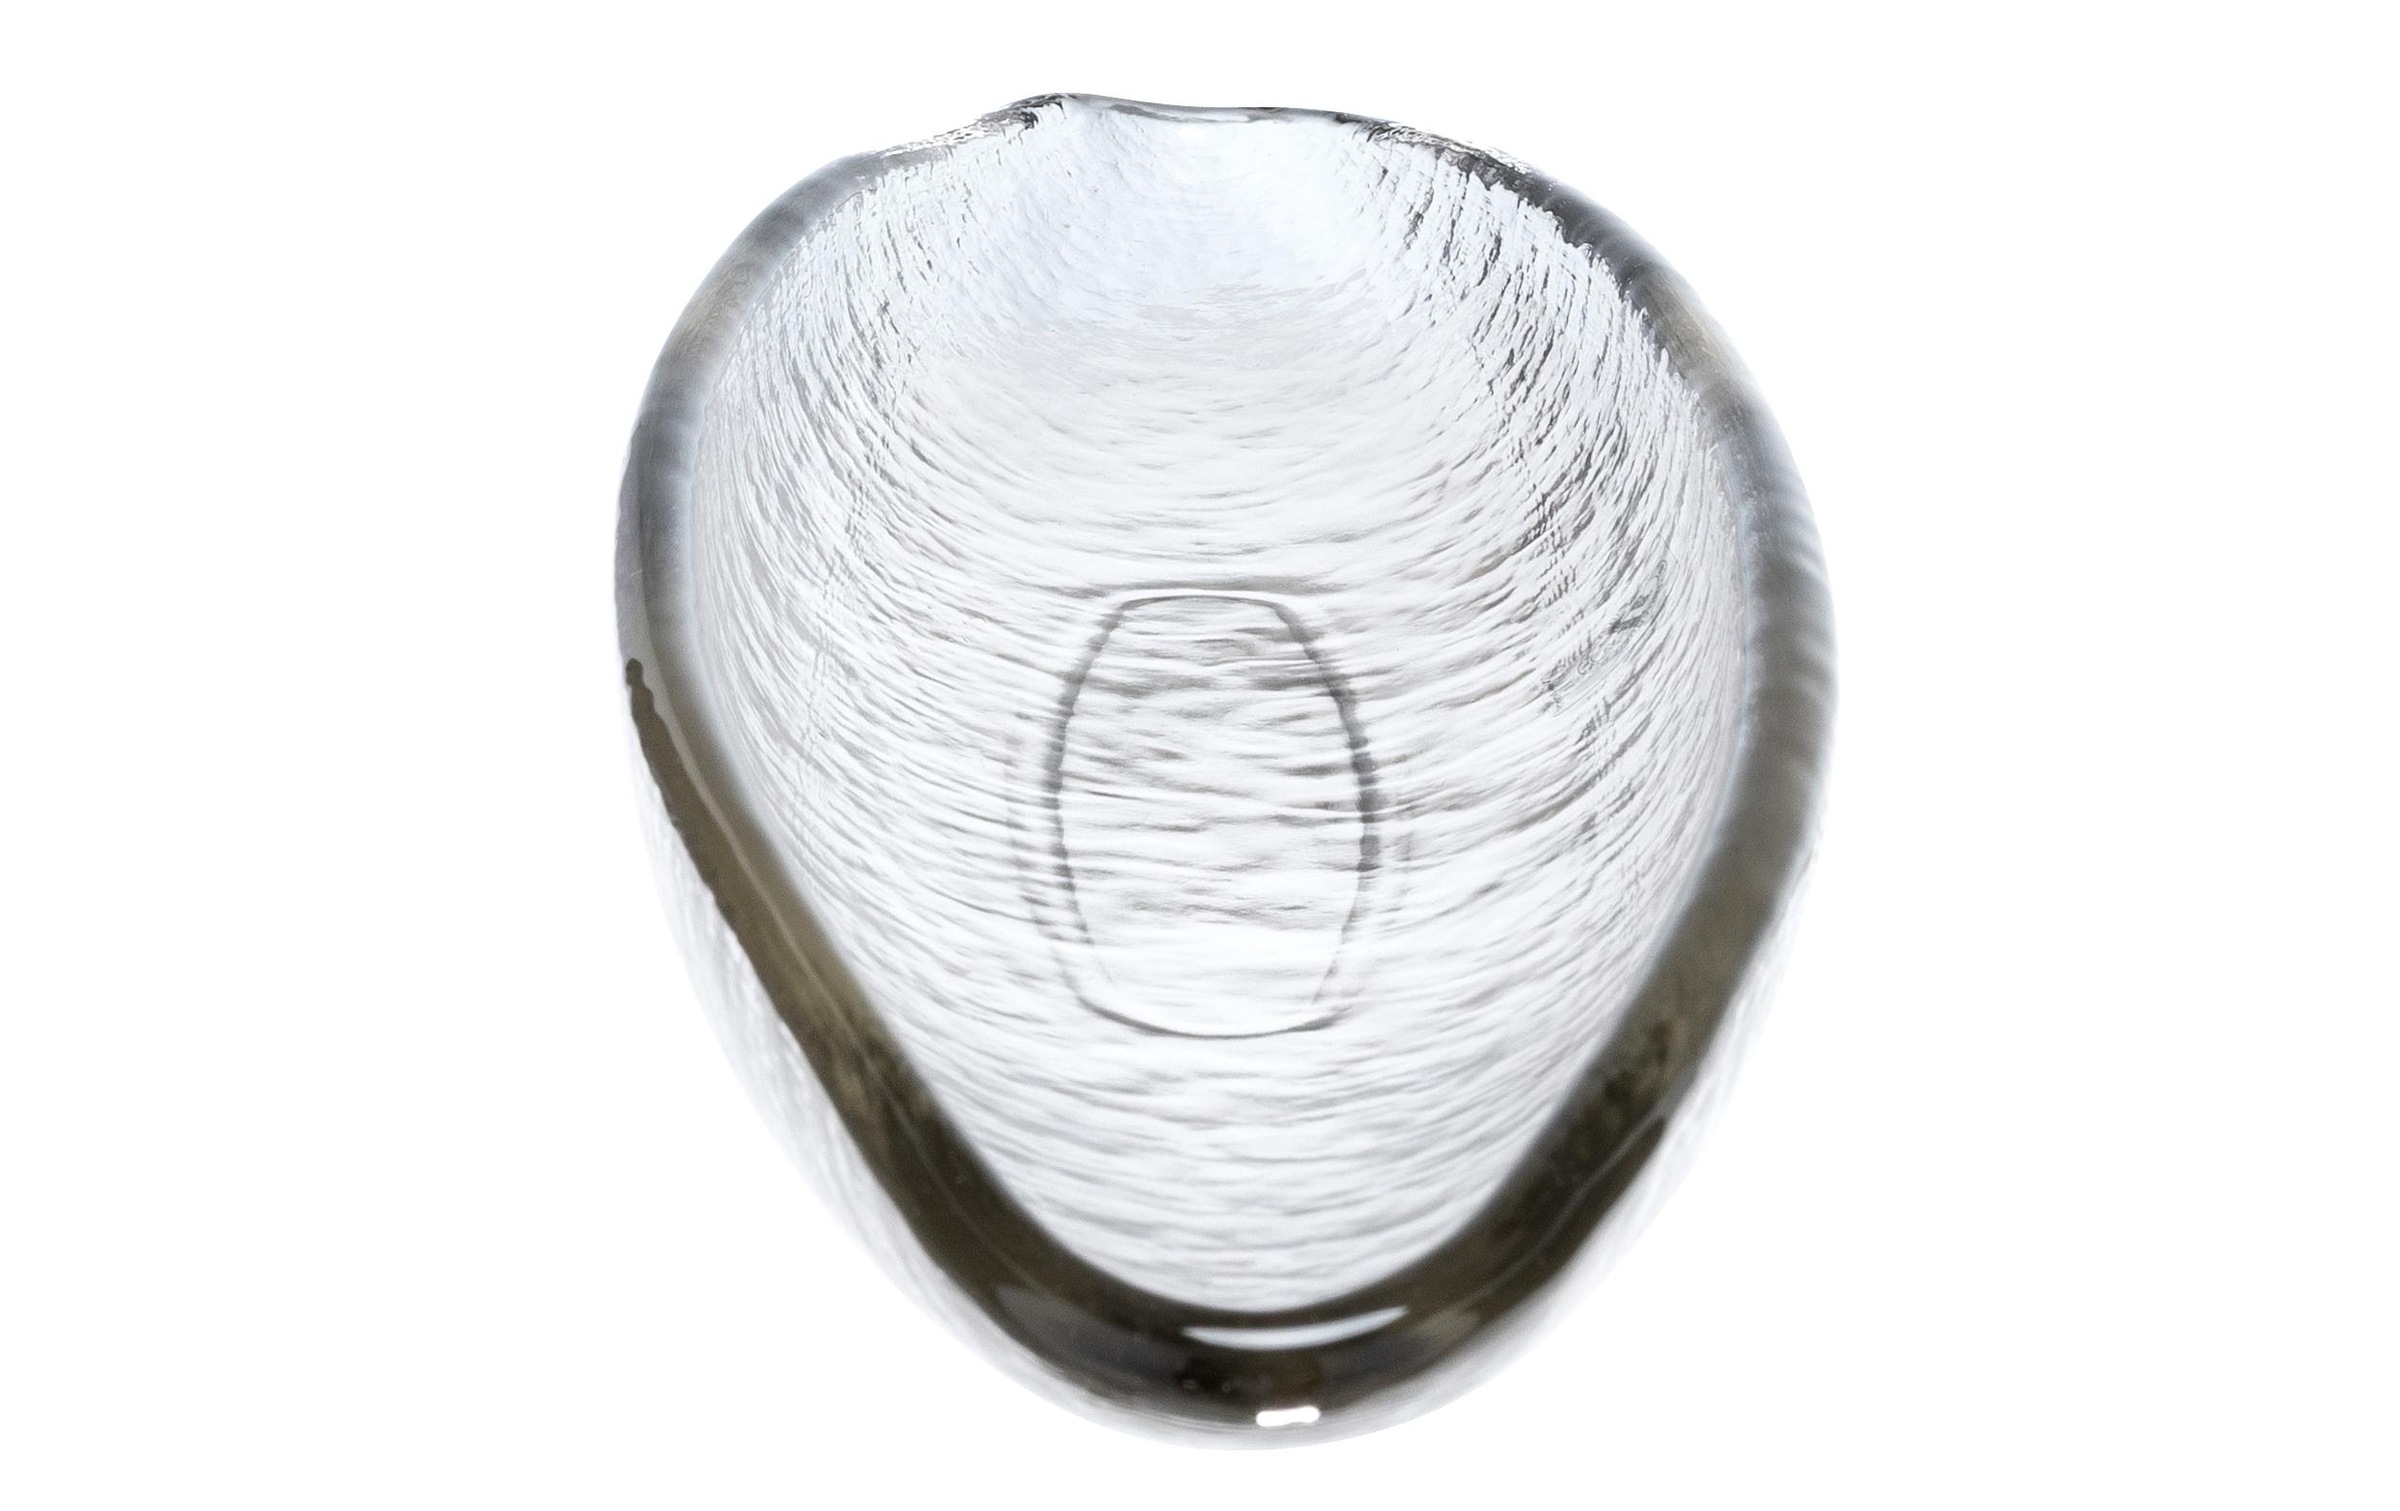 Glasi Hergiswil Schale »Gondola gross, 68 cm, Glasi Hergiswil«, aus Glas